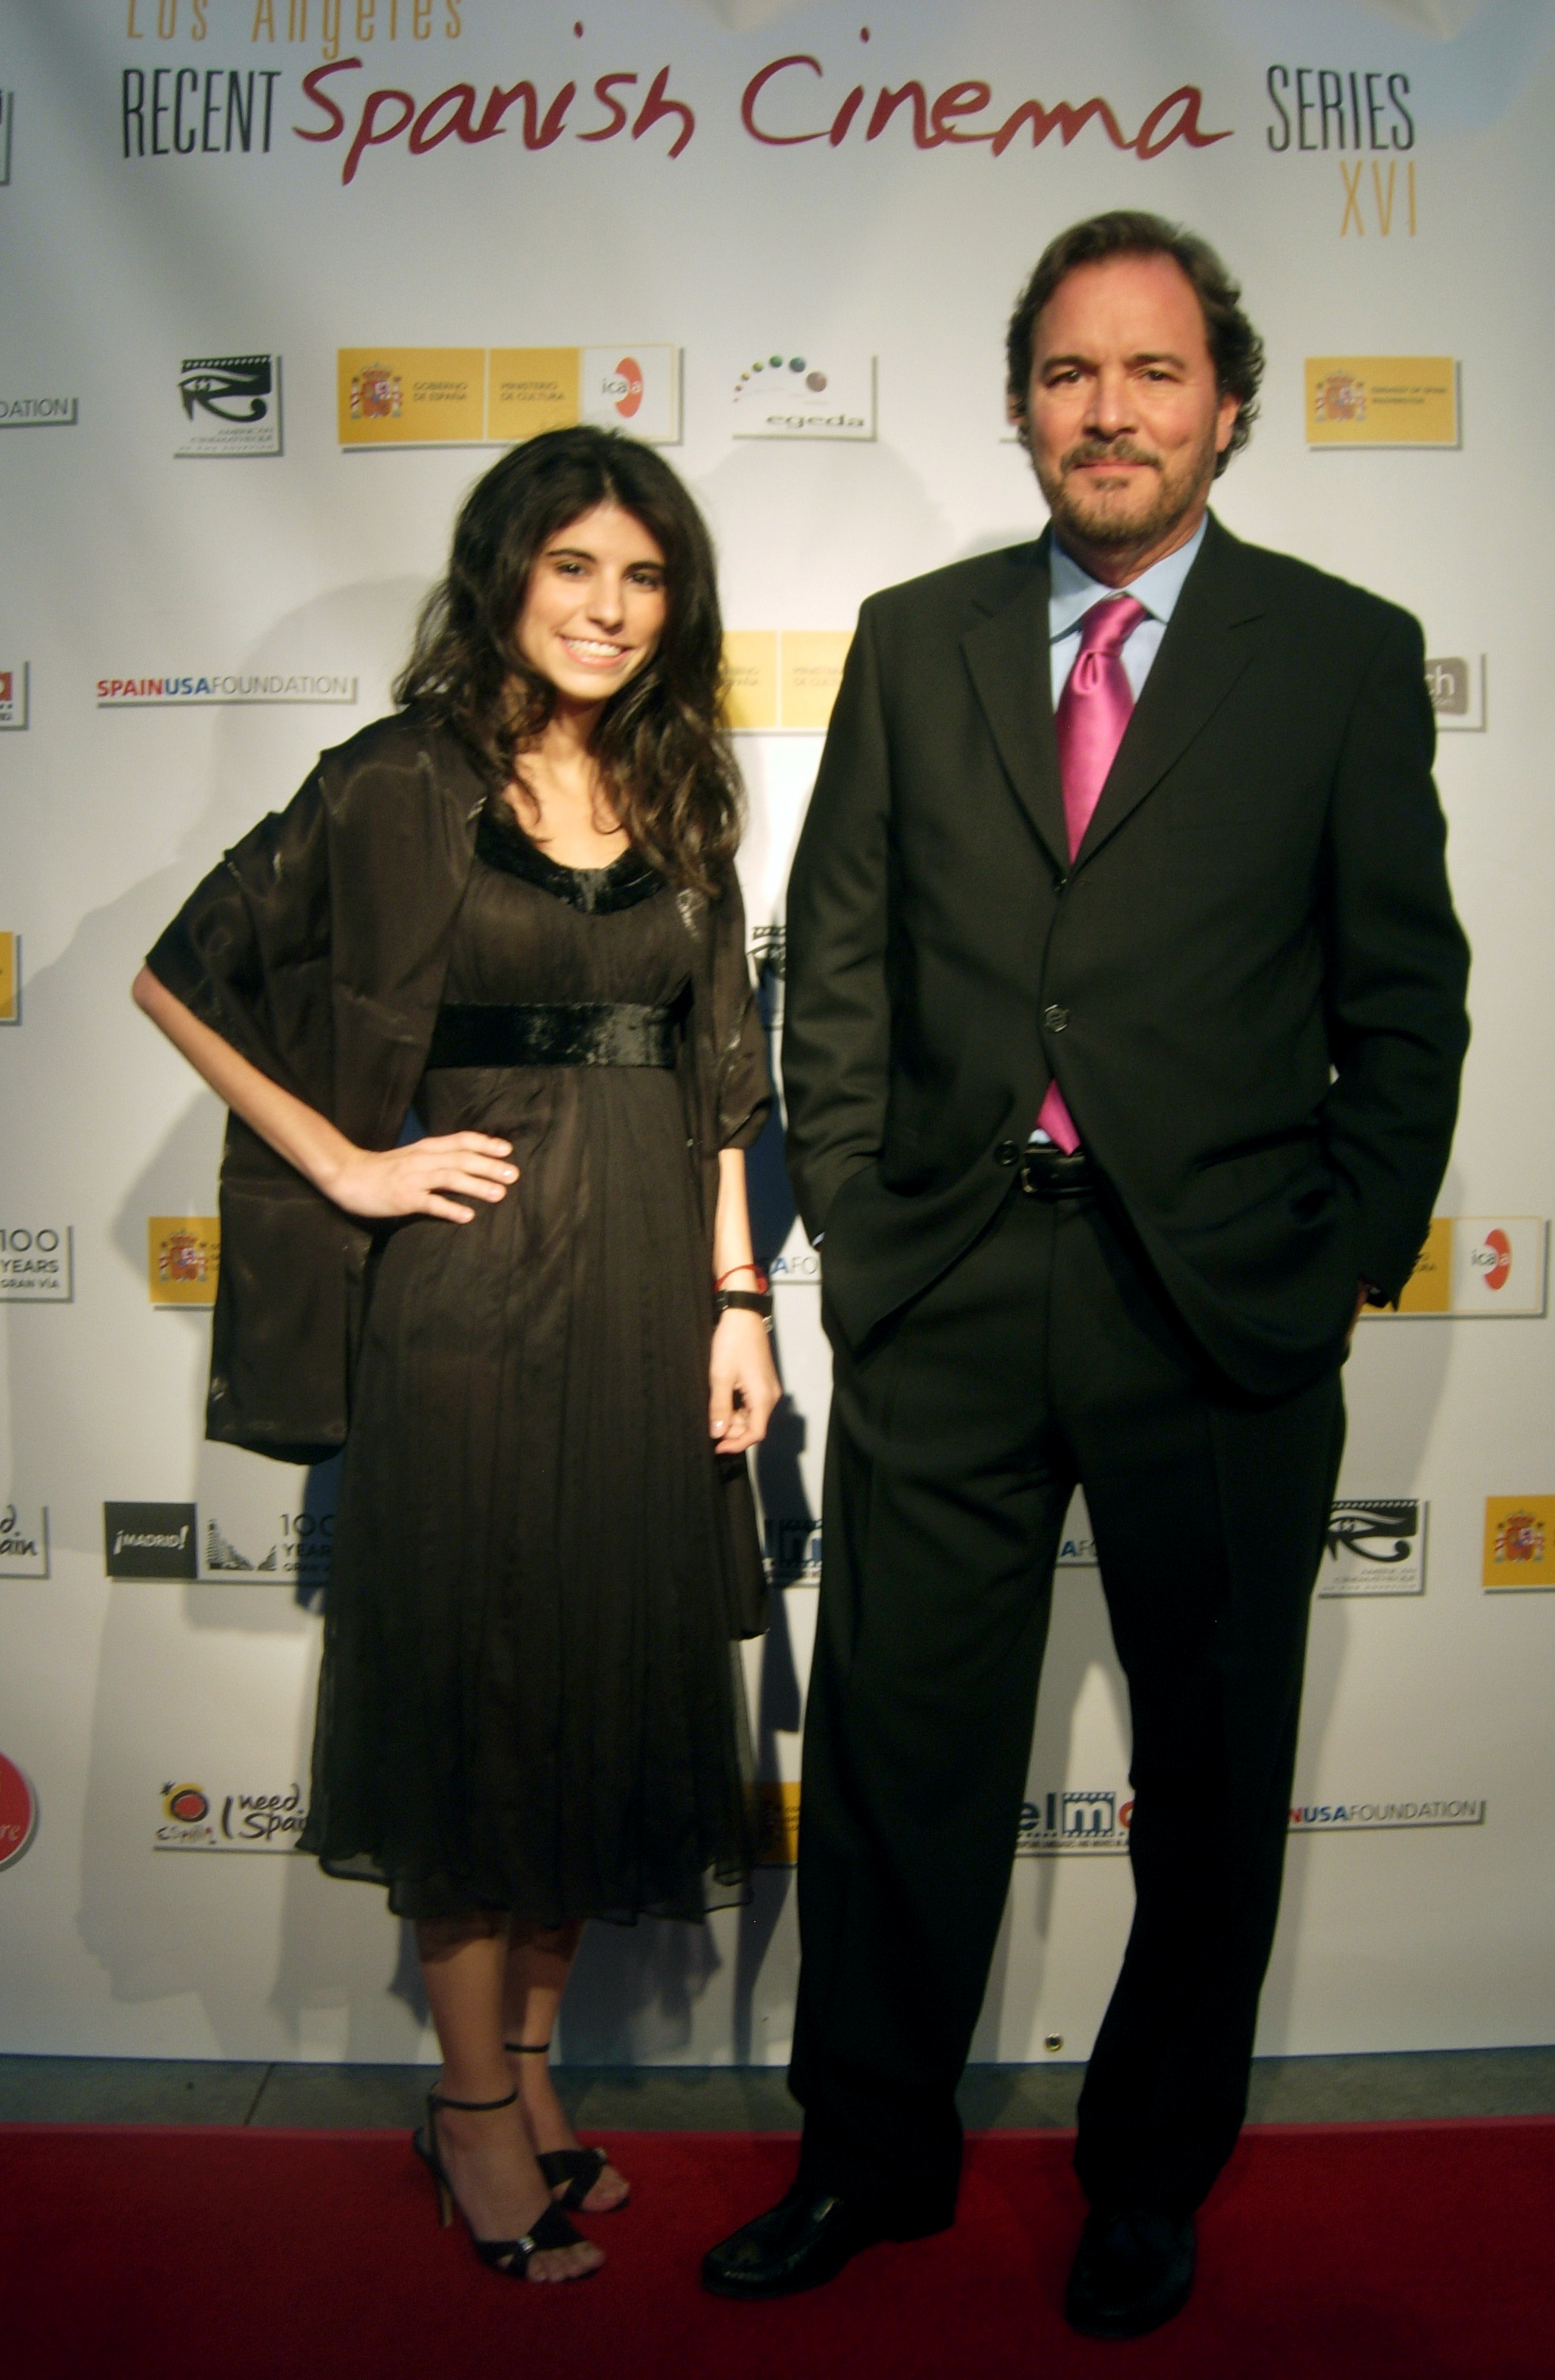 Manuel Espinosa and Romina Espinosa at event of Recent Spanish Cinema Series 2010